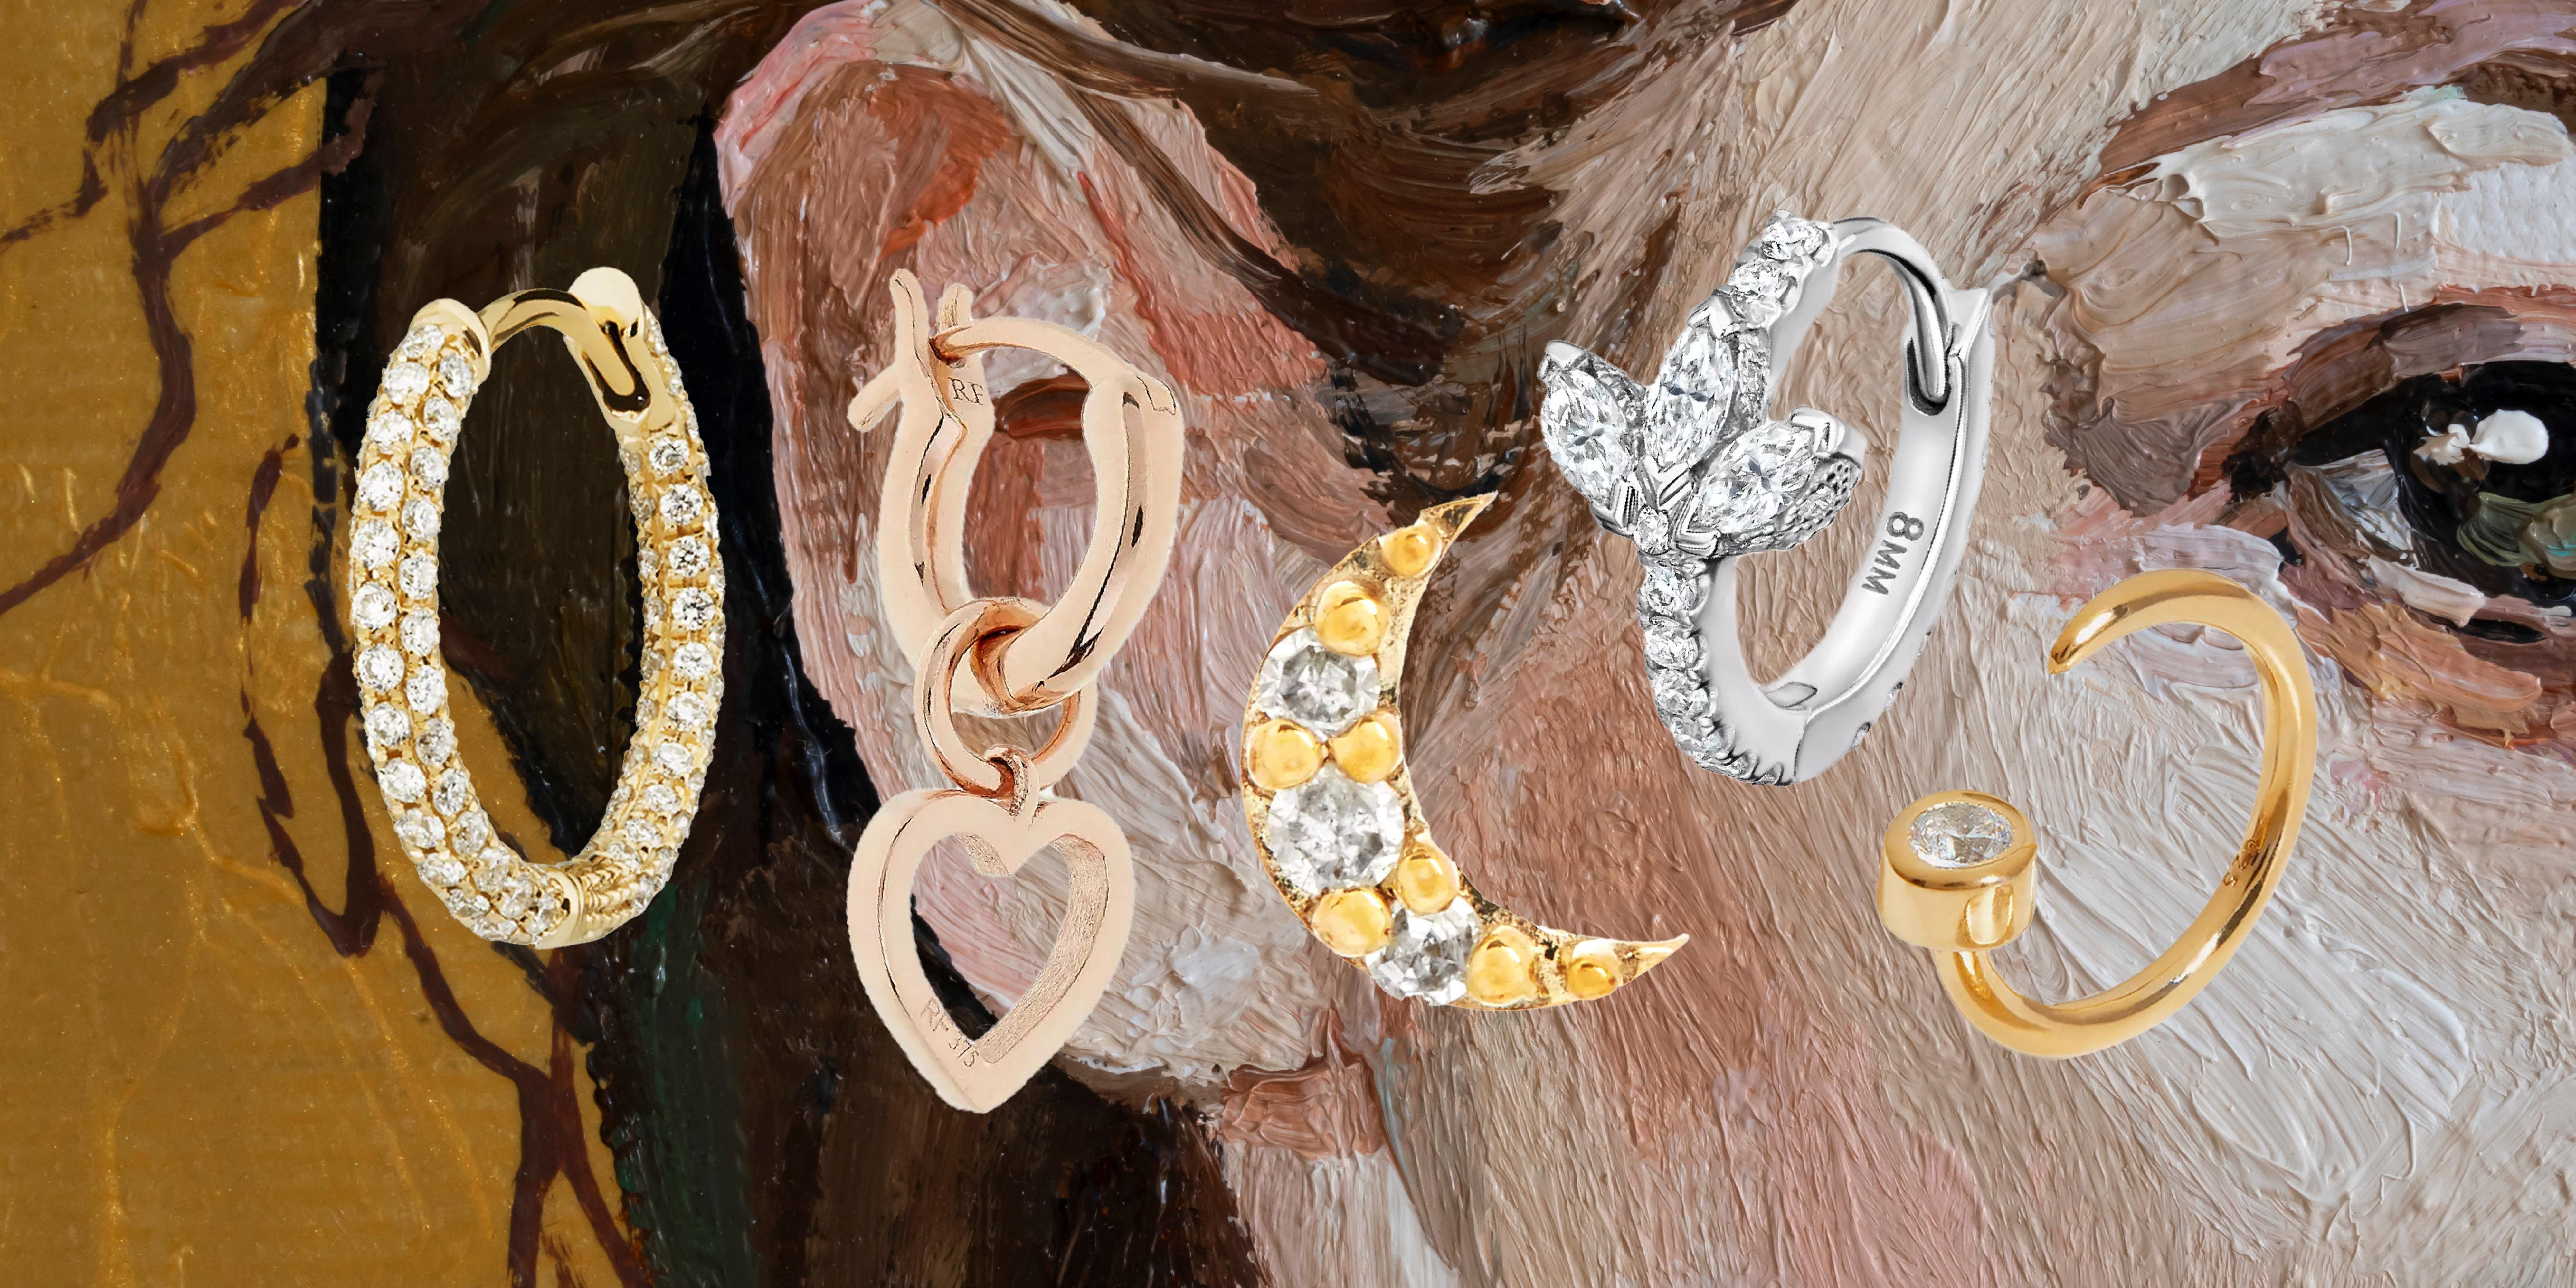 How To Sleep With Earrings Comfortably - Francesca Jewellery